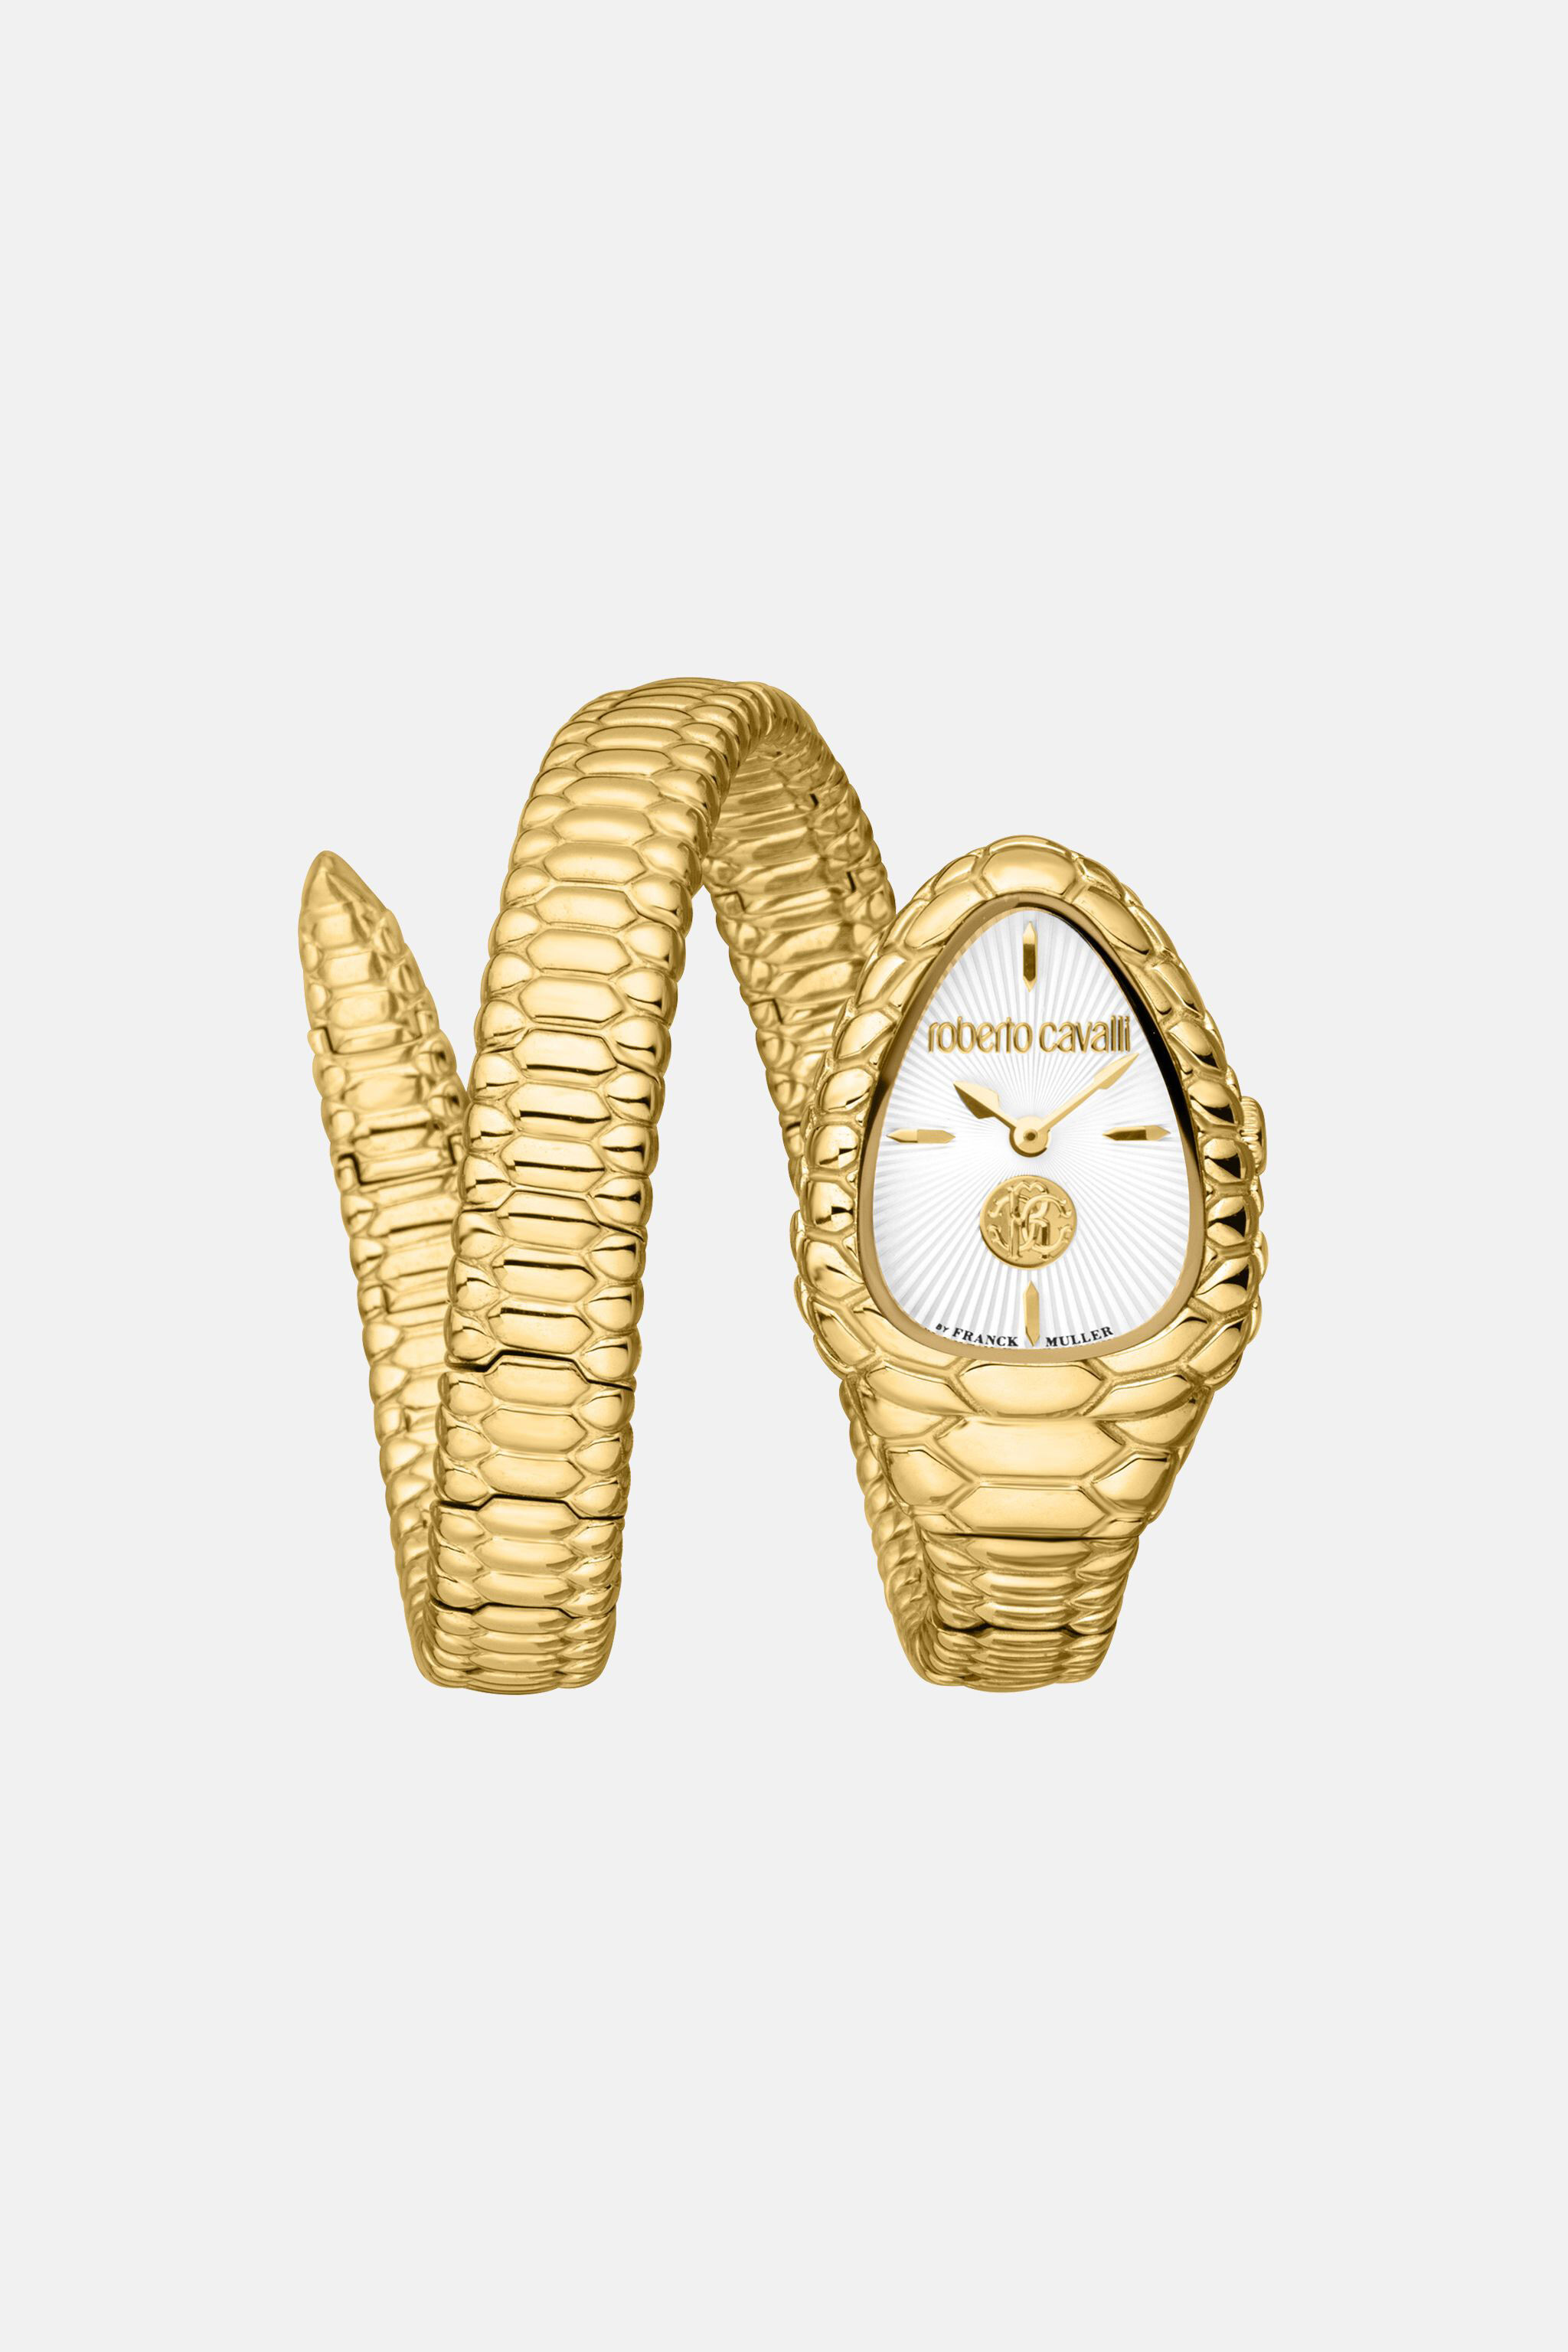 Roberto Cavalli by Franck Muller Signature Snake watch